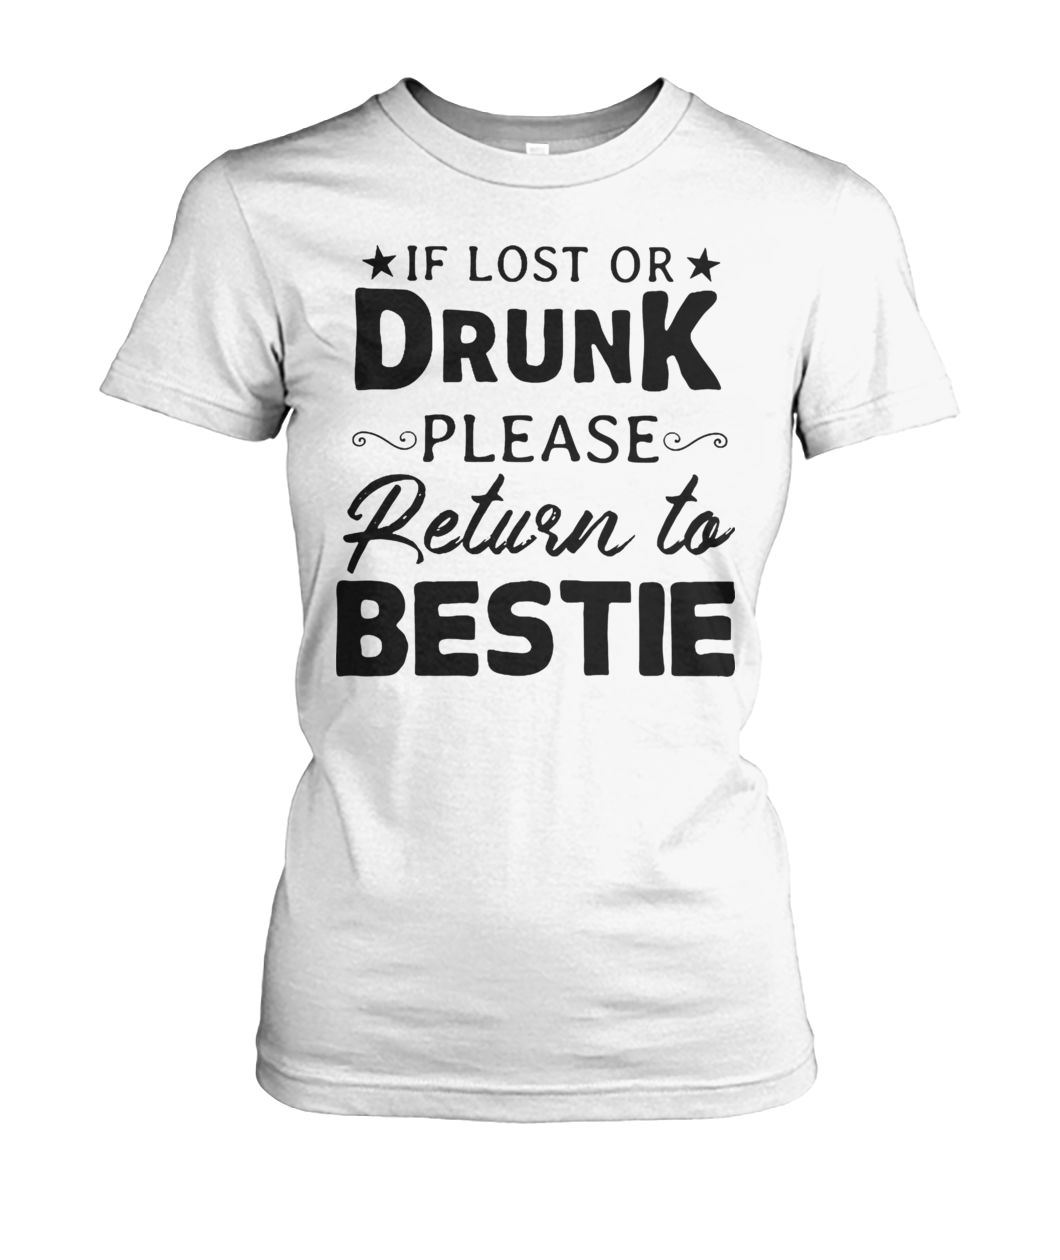 If lost or drunk please return to bestie women's cew tee